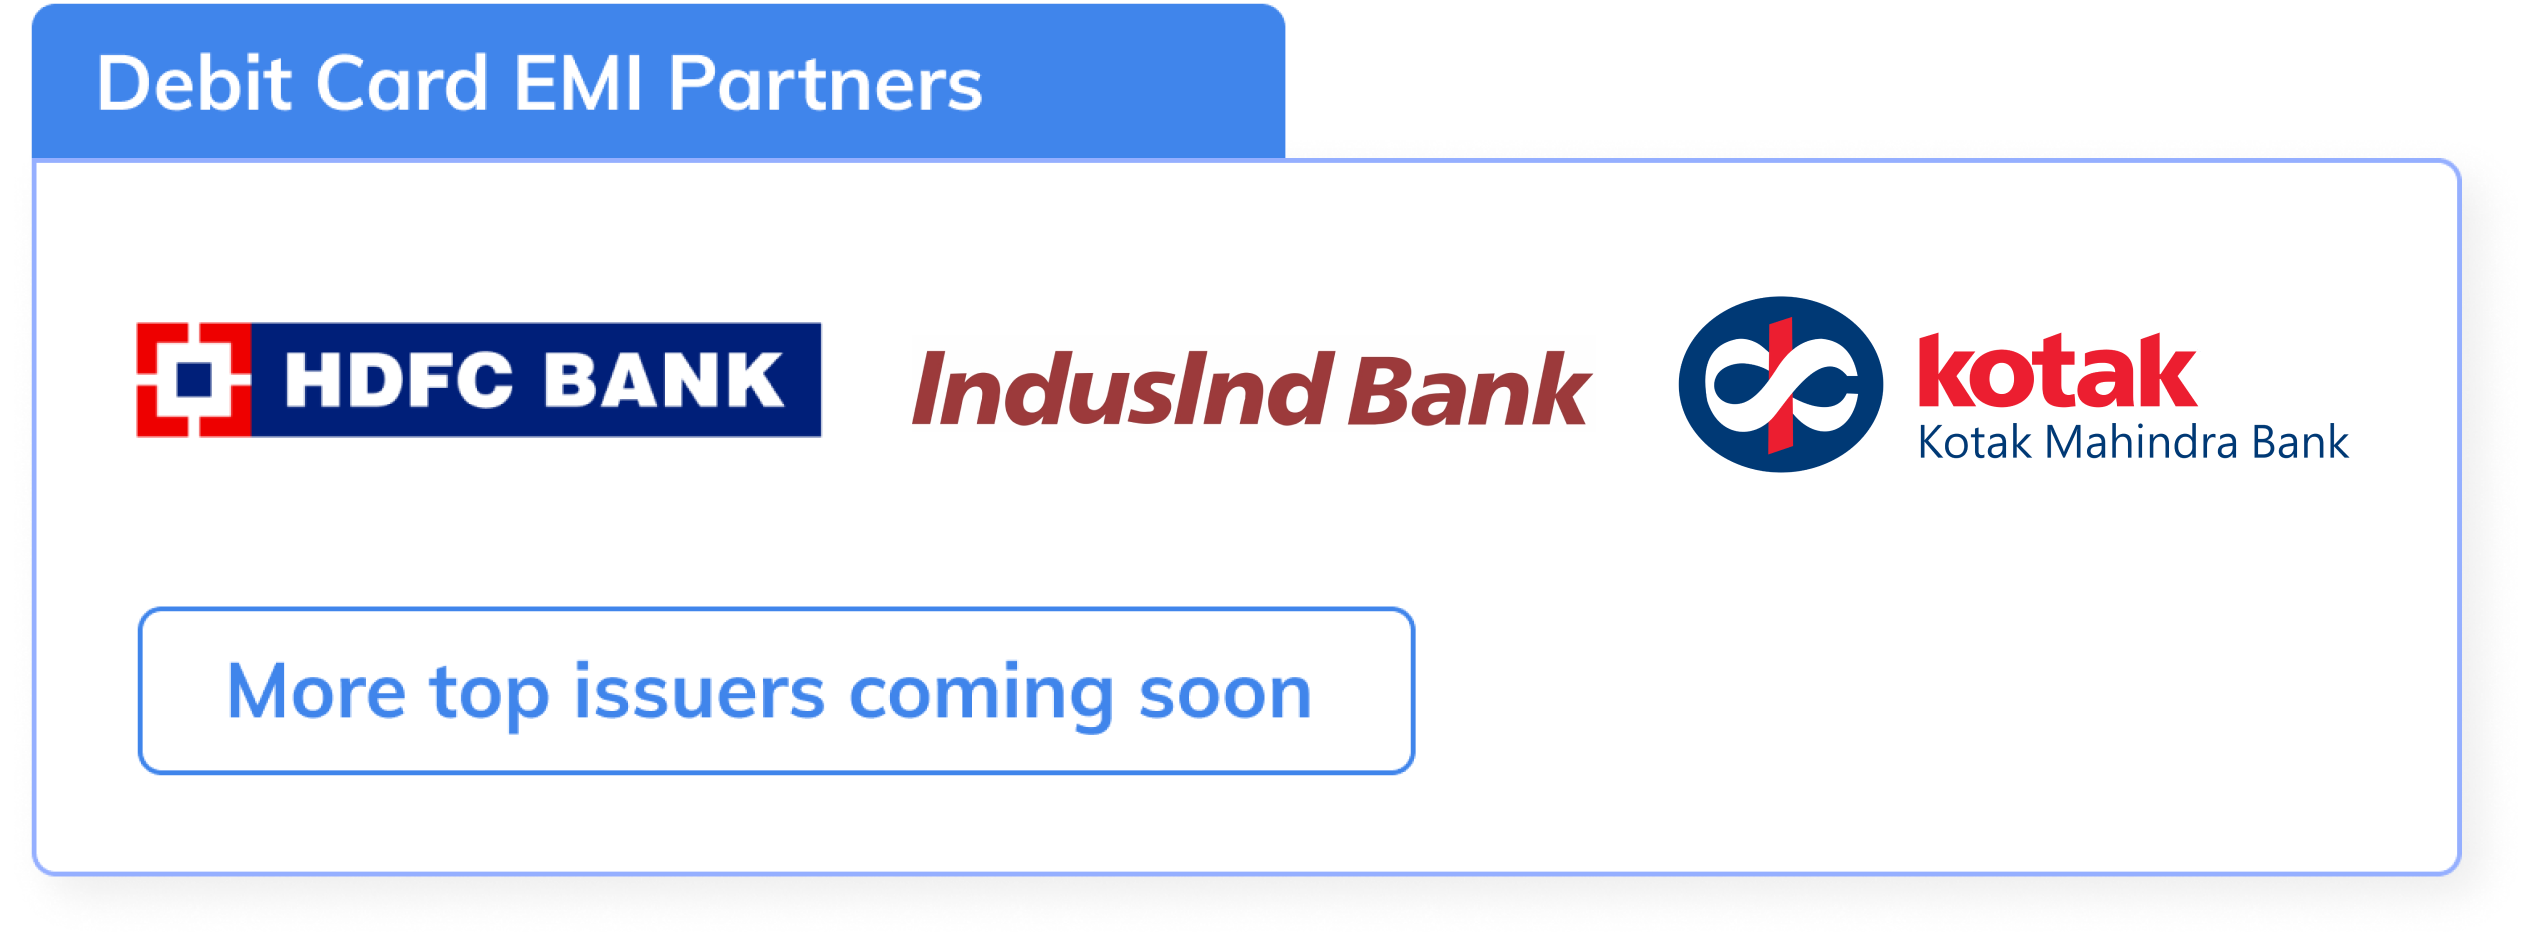 EMI Bank Partners Logo Group 1 + 12 More